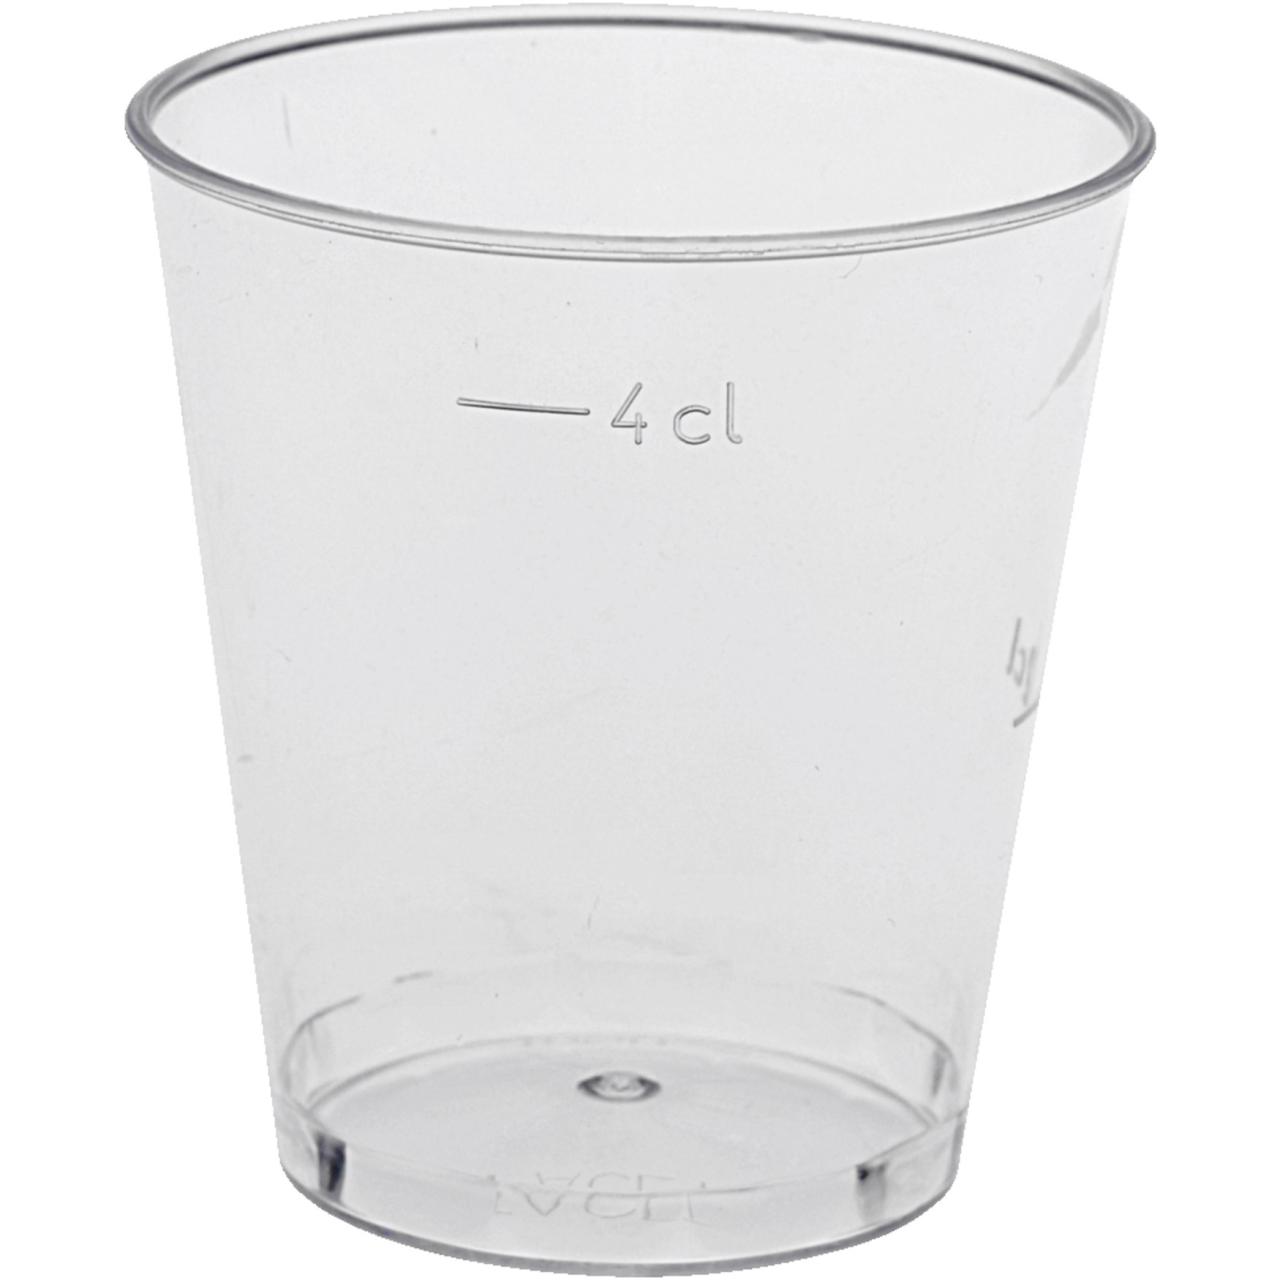 Engangsshotsglas 25 stk. 4 cl/Einweg-Schnapsglas 25 Stk. 4 cl